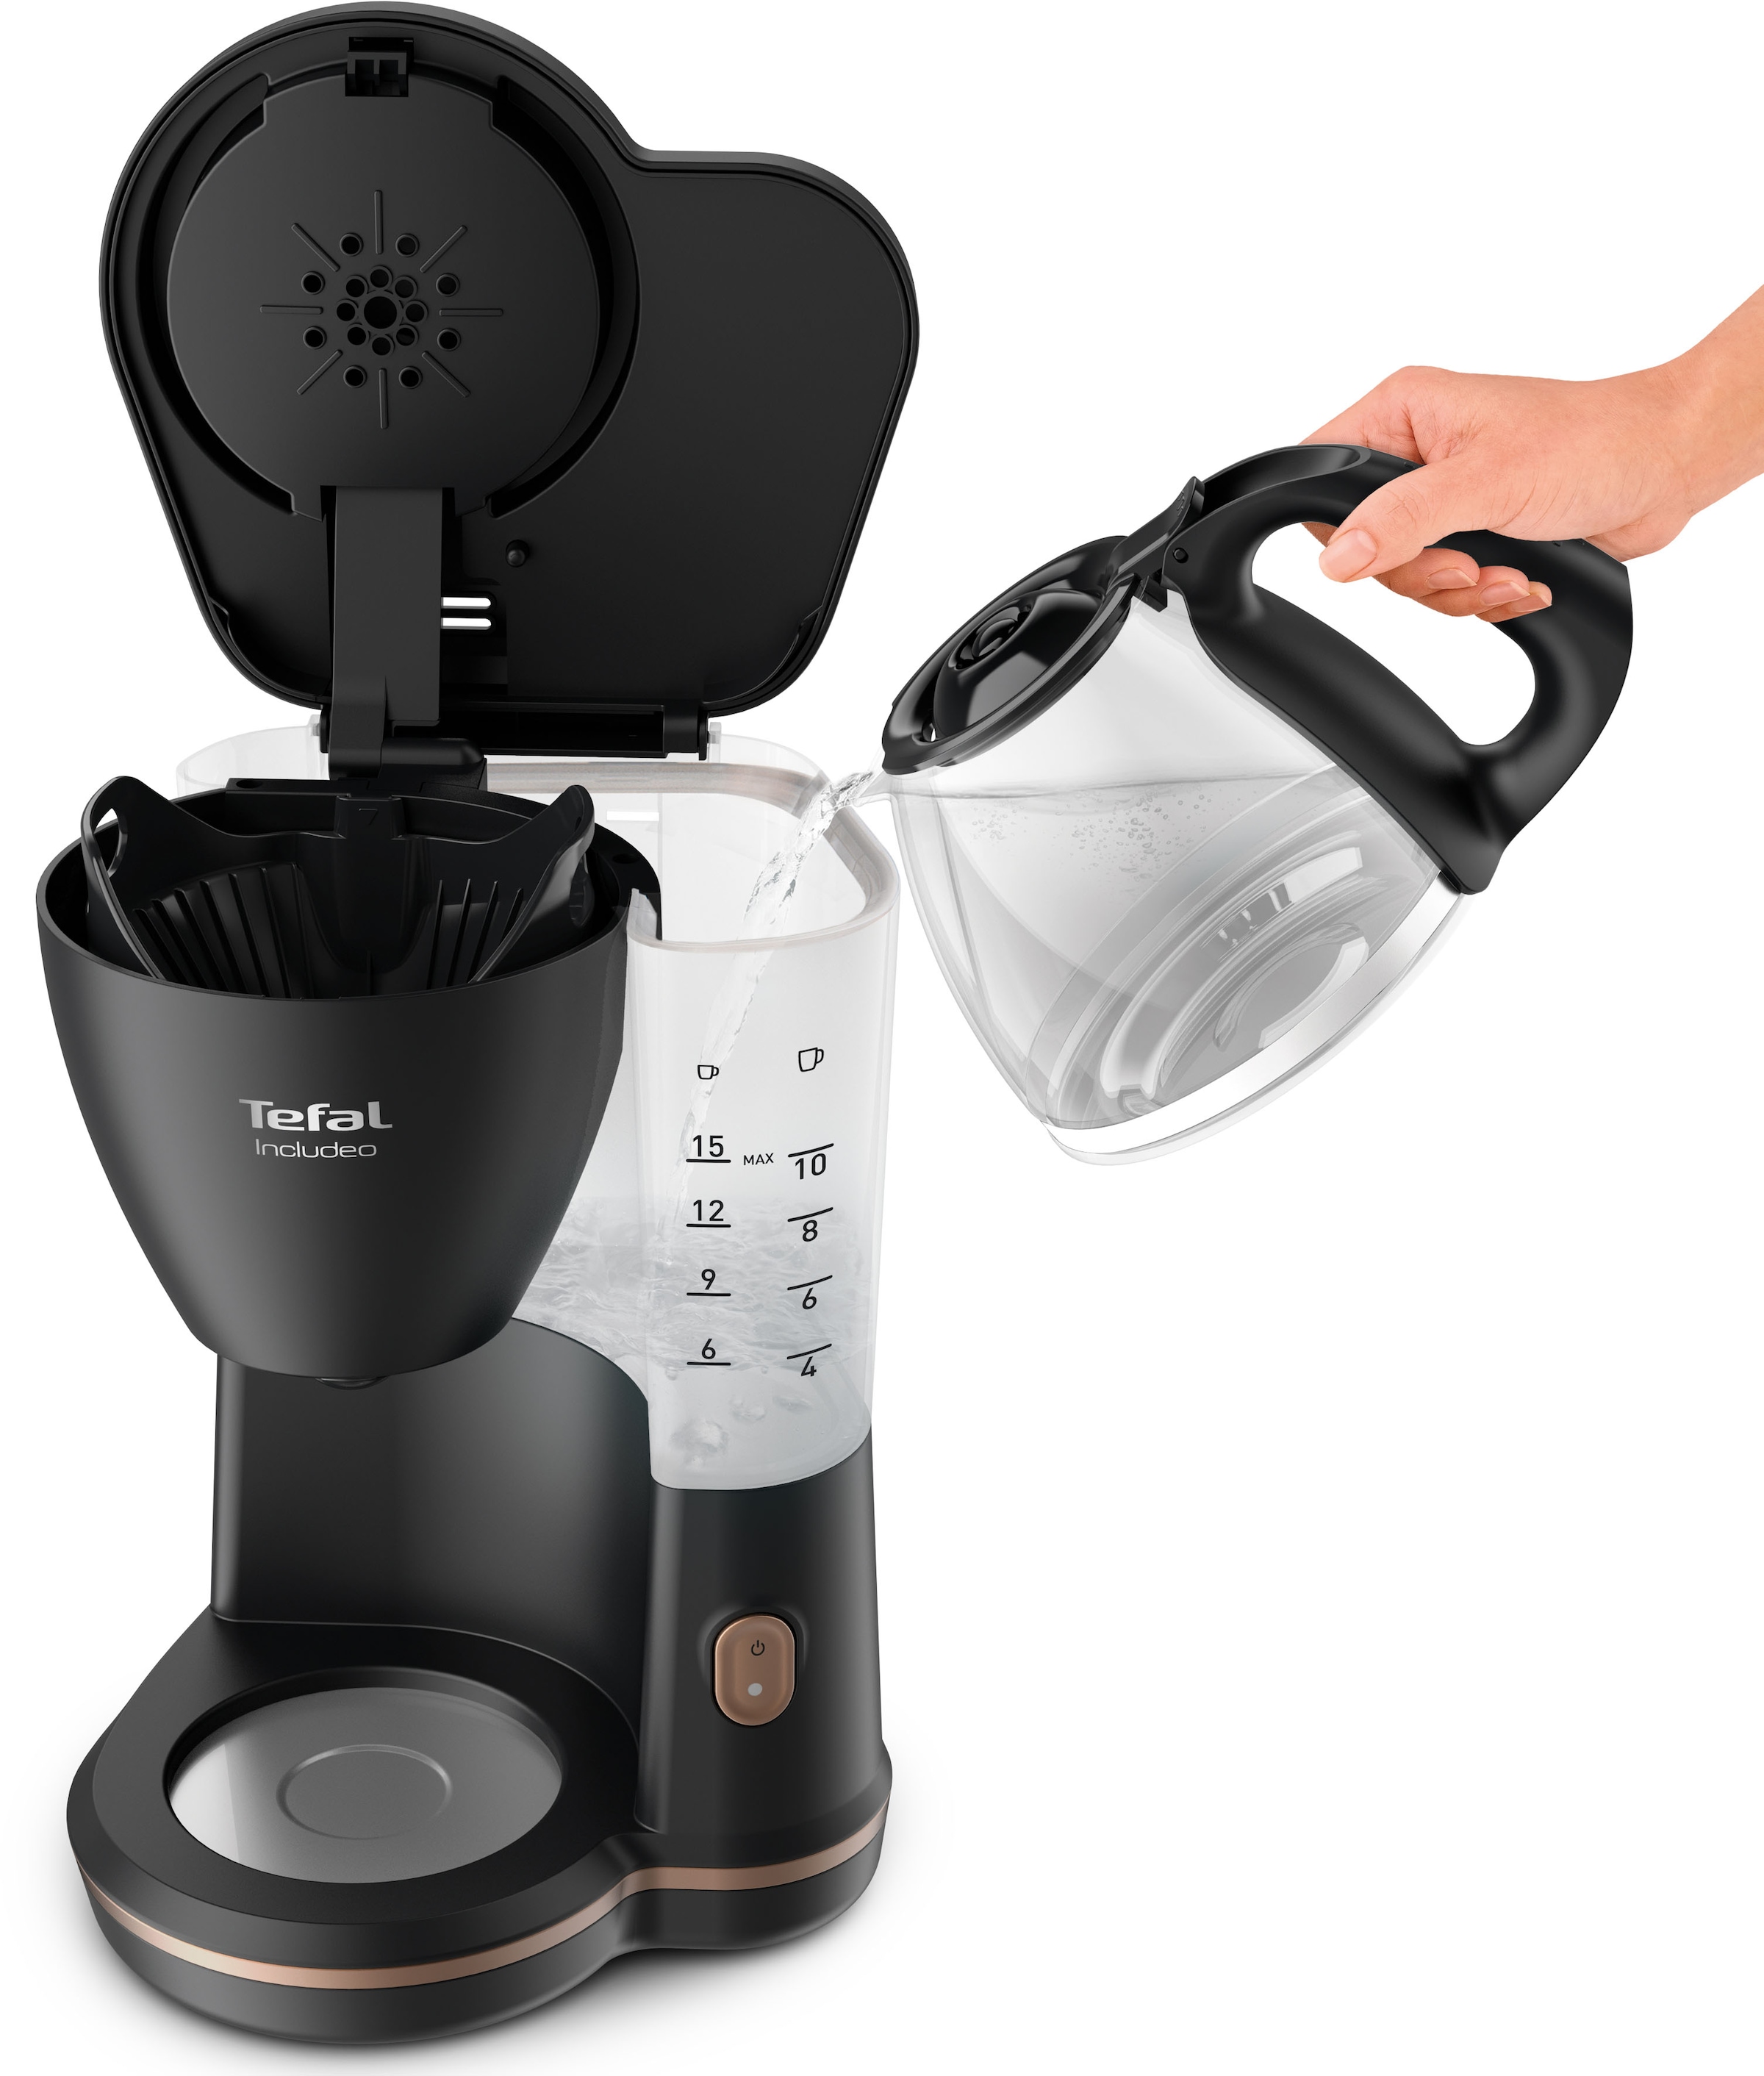 zwei - bestellen Filterkaffeemaschine online mit 10 Kaffeekanne, Tefal L, »CM5338 Incluedo«, Griffen 15 1,25 Tassen, 1,25 herausnehmbarer l Filtereinsatz